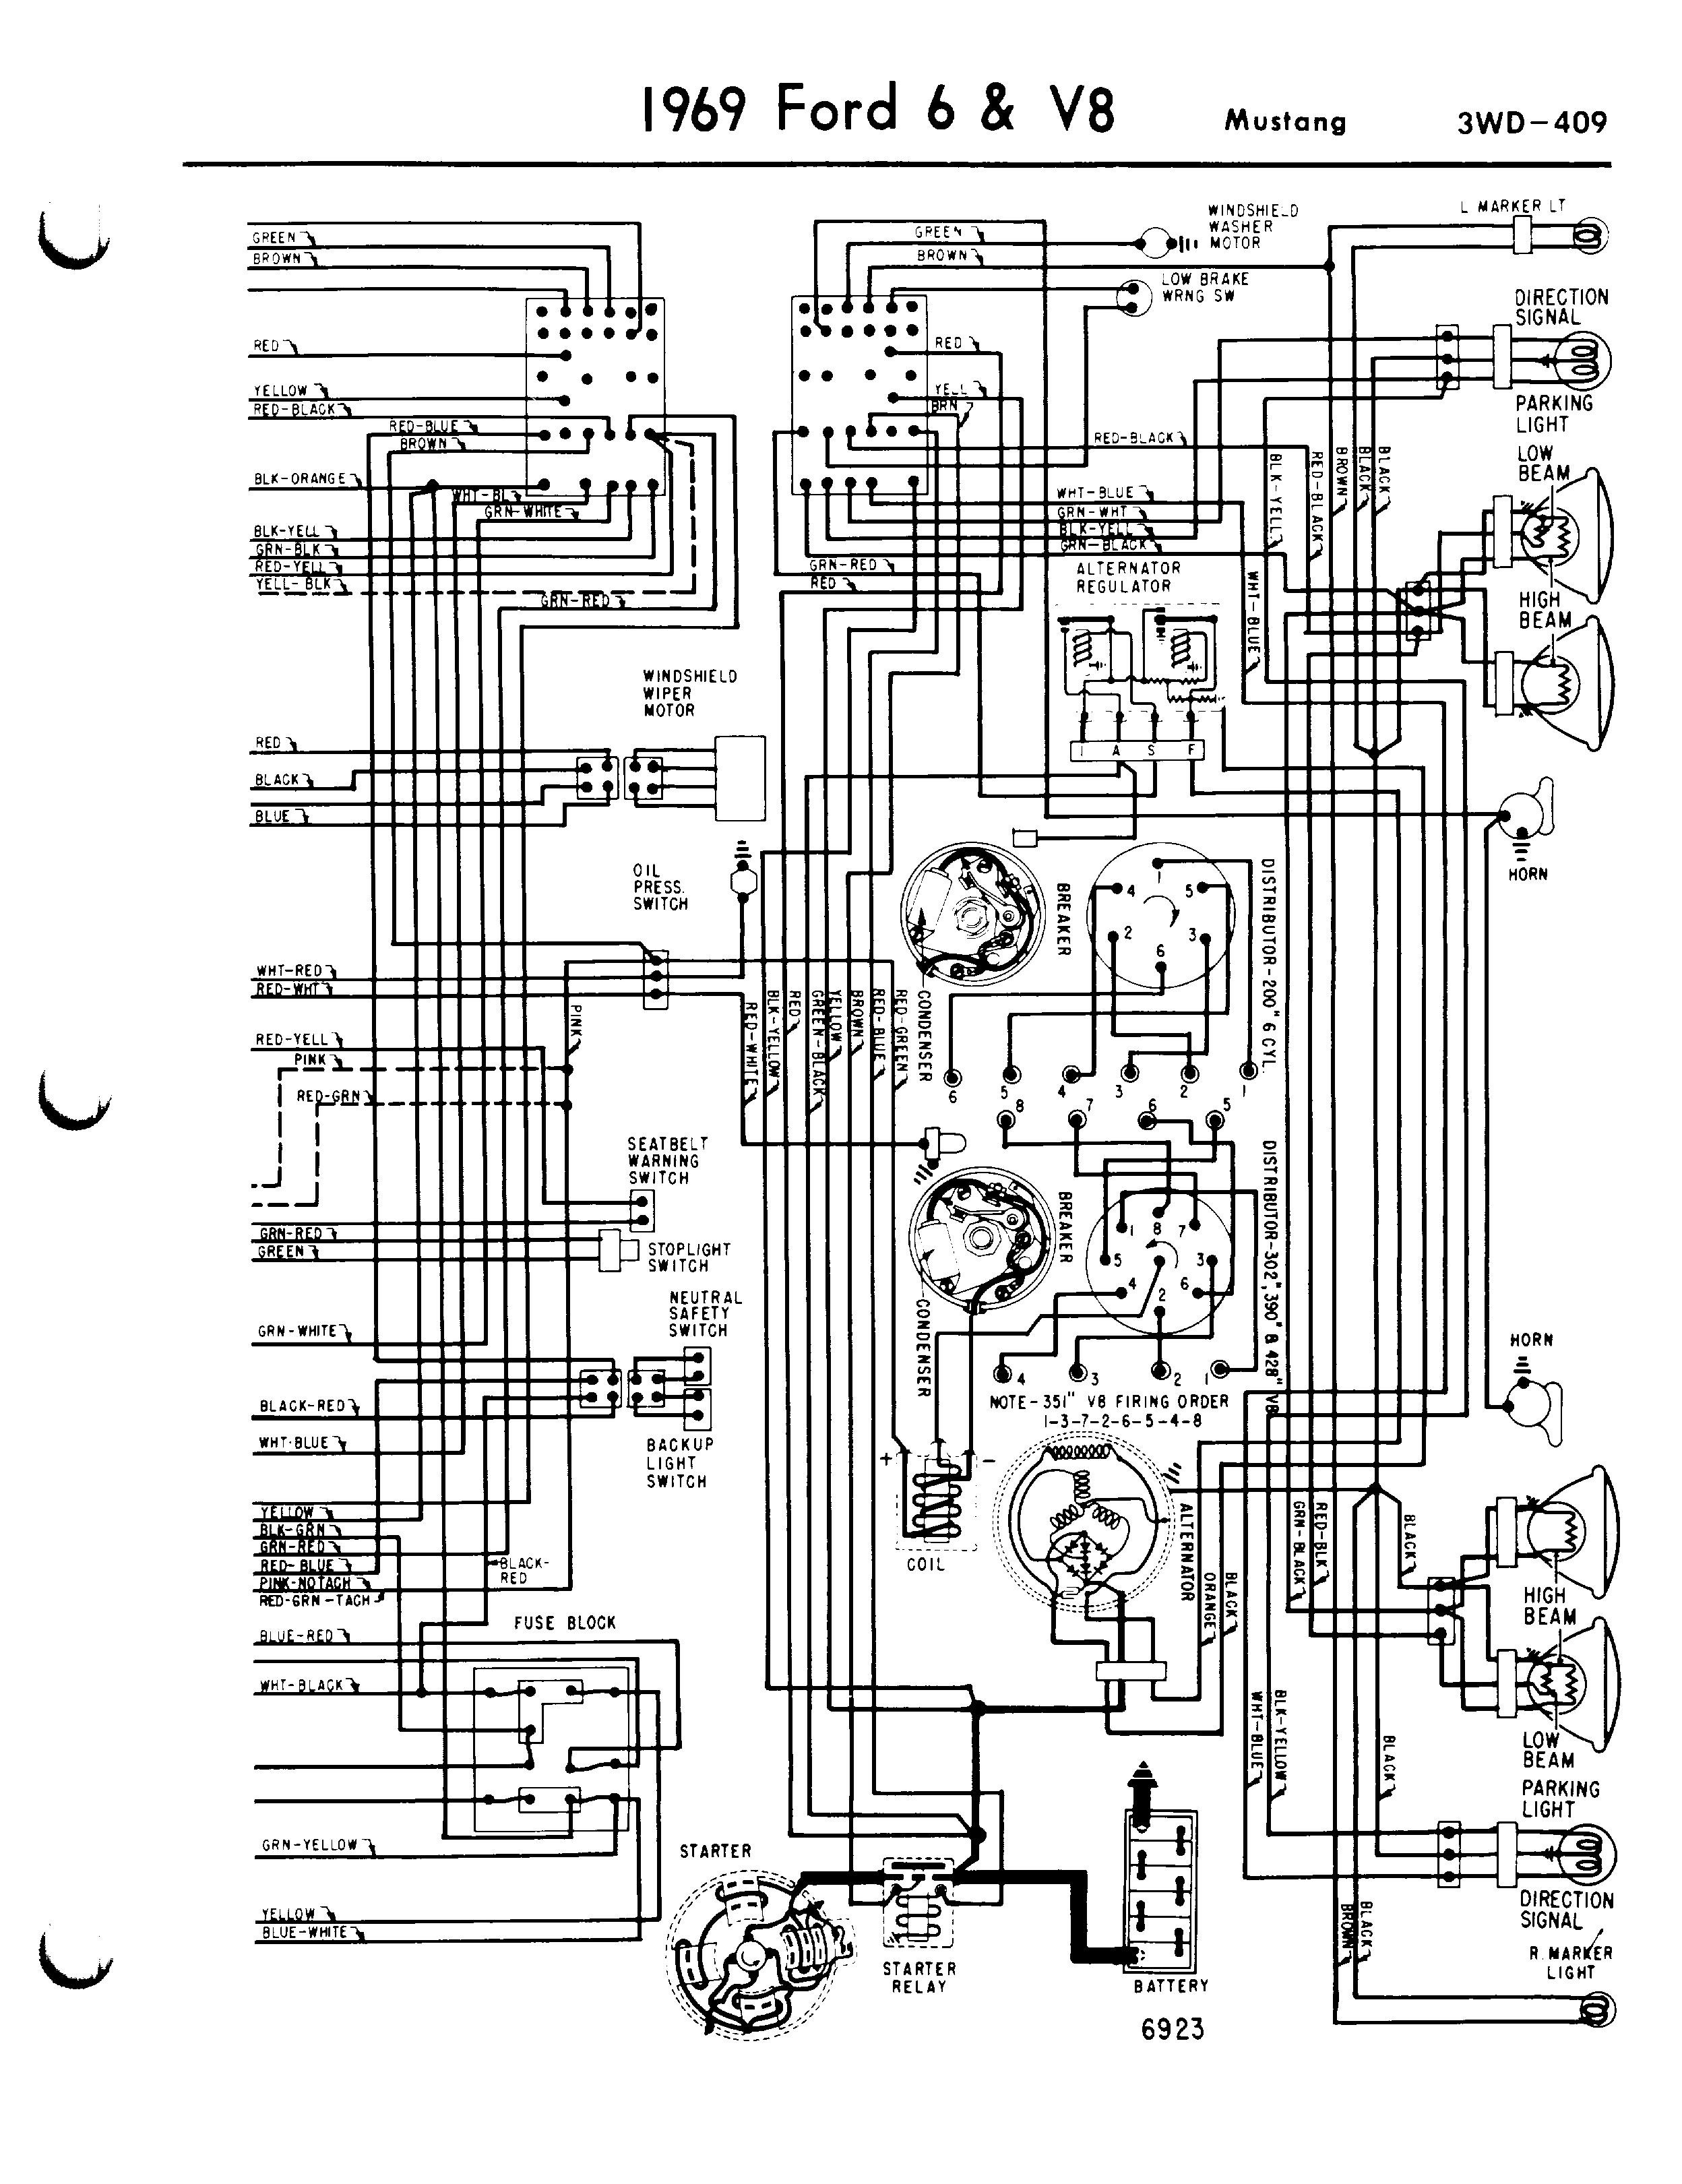 Ford 4 6 V8 Engine Diagram Wiring Diagram 1966 ford Mustang 6 V8 3wd 235 Schematic for Alluring Of Ford 4 6 V8 Engine Diagram